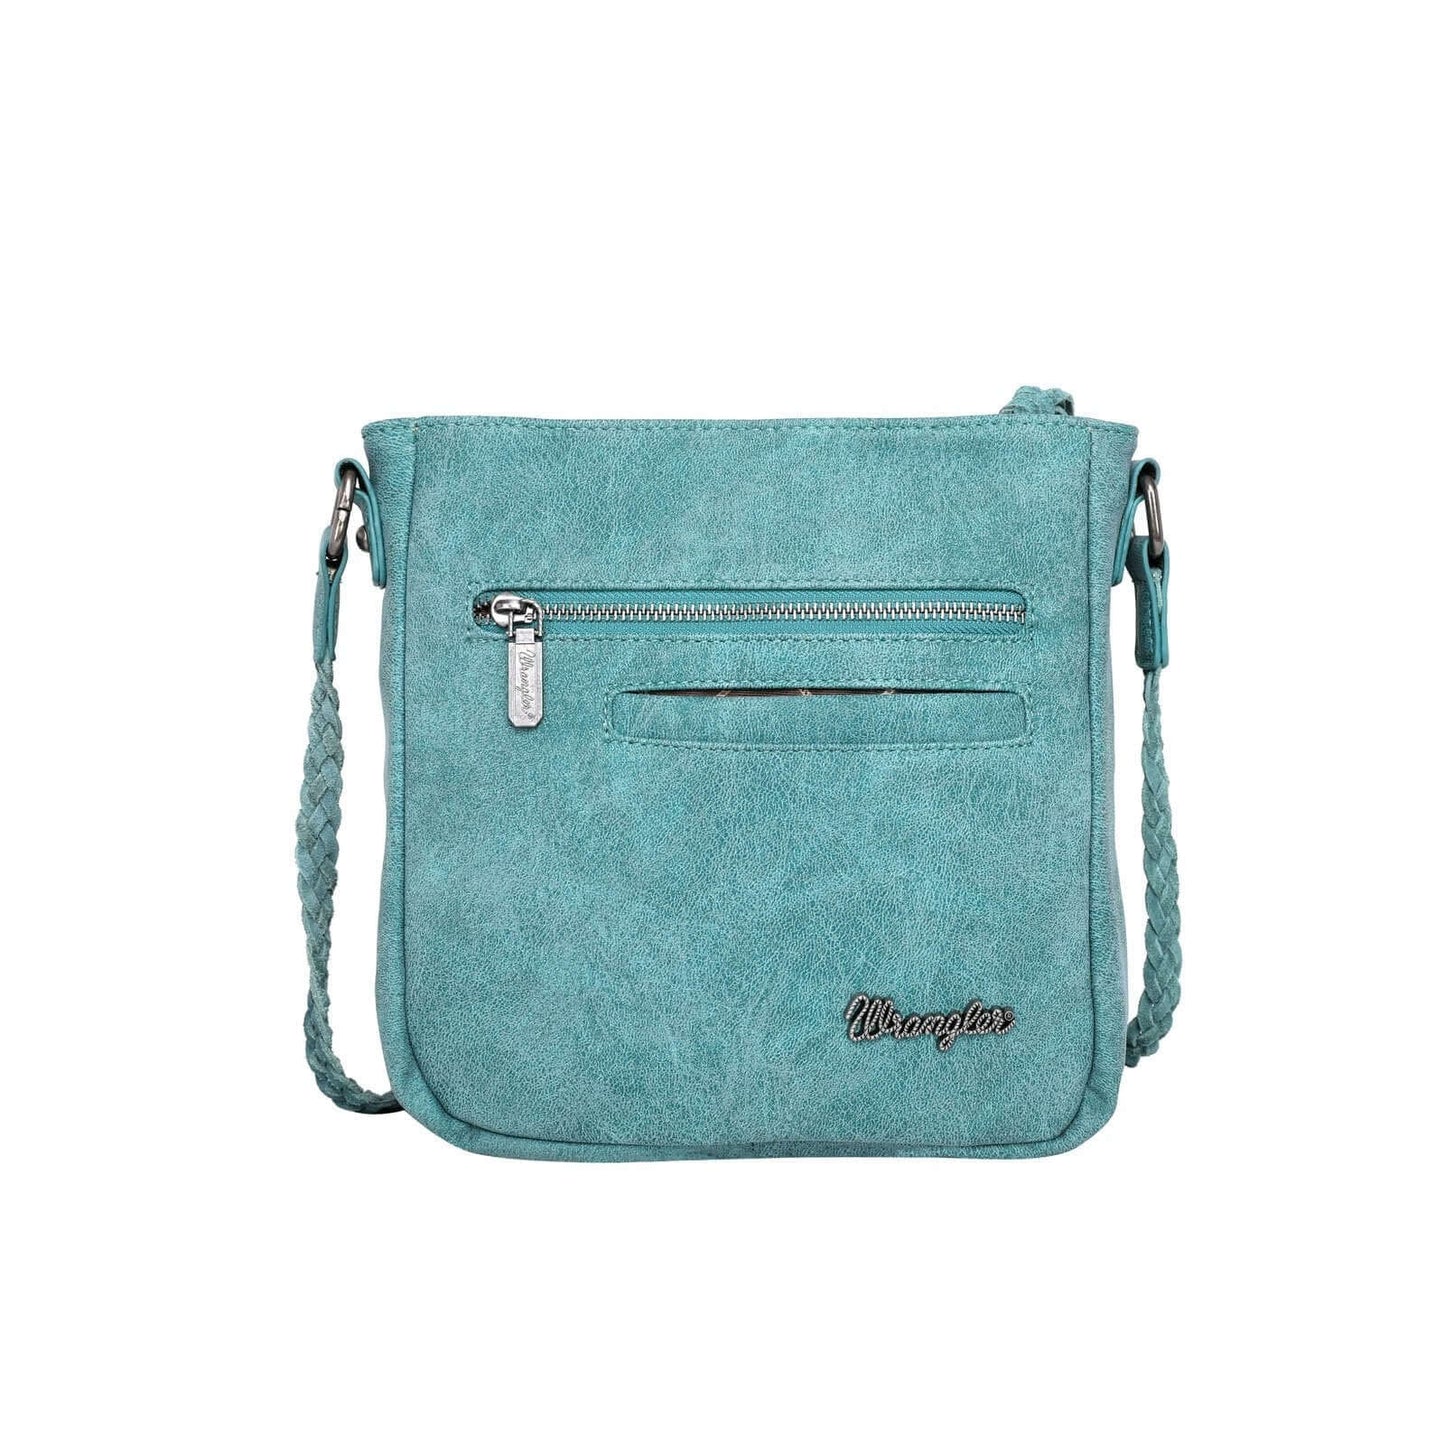 WG11-8360 TQ-1 Wrangler leather fringe crossbody bag back- Turquoise